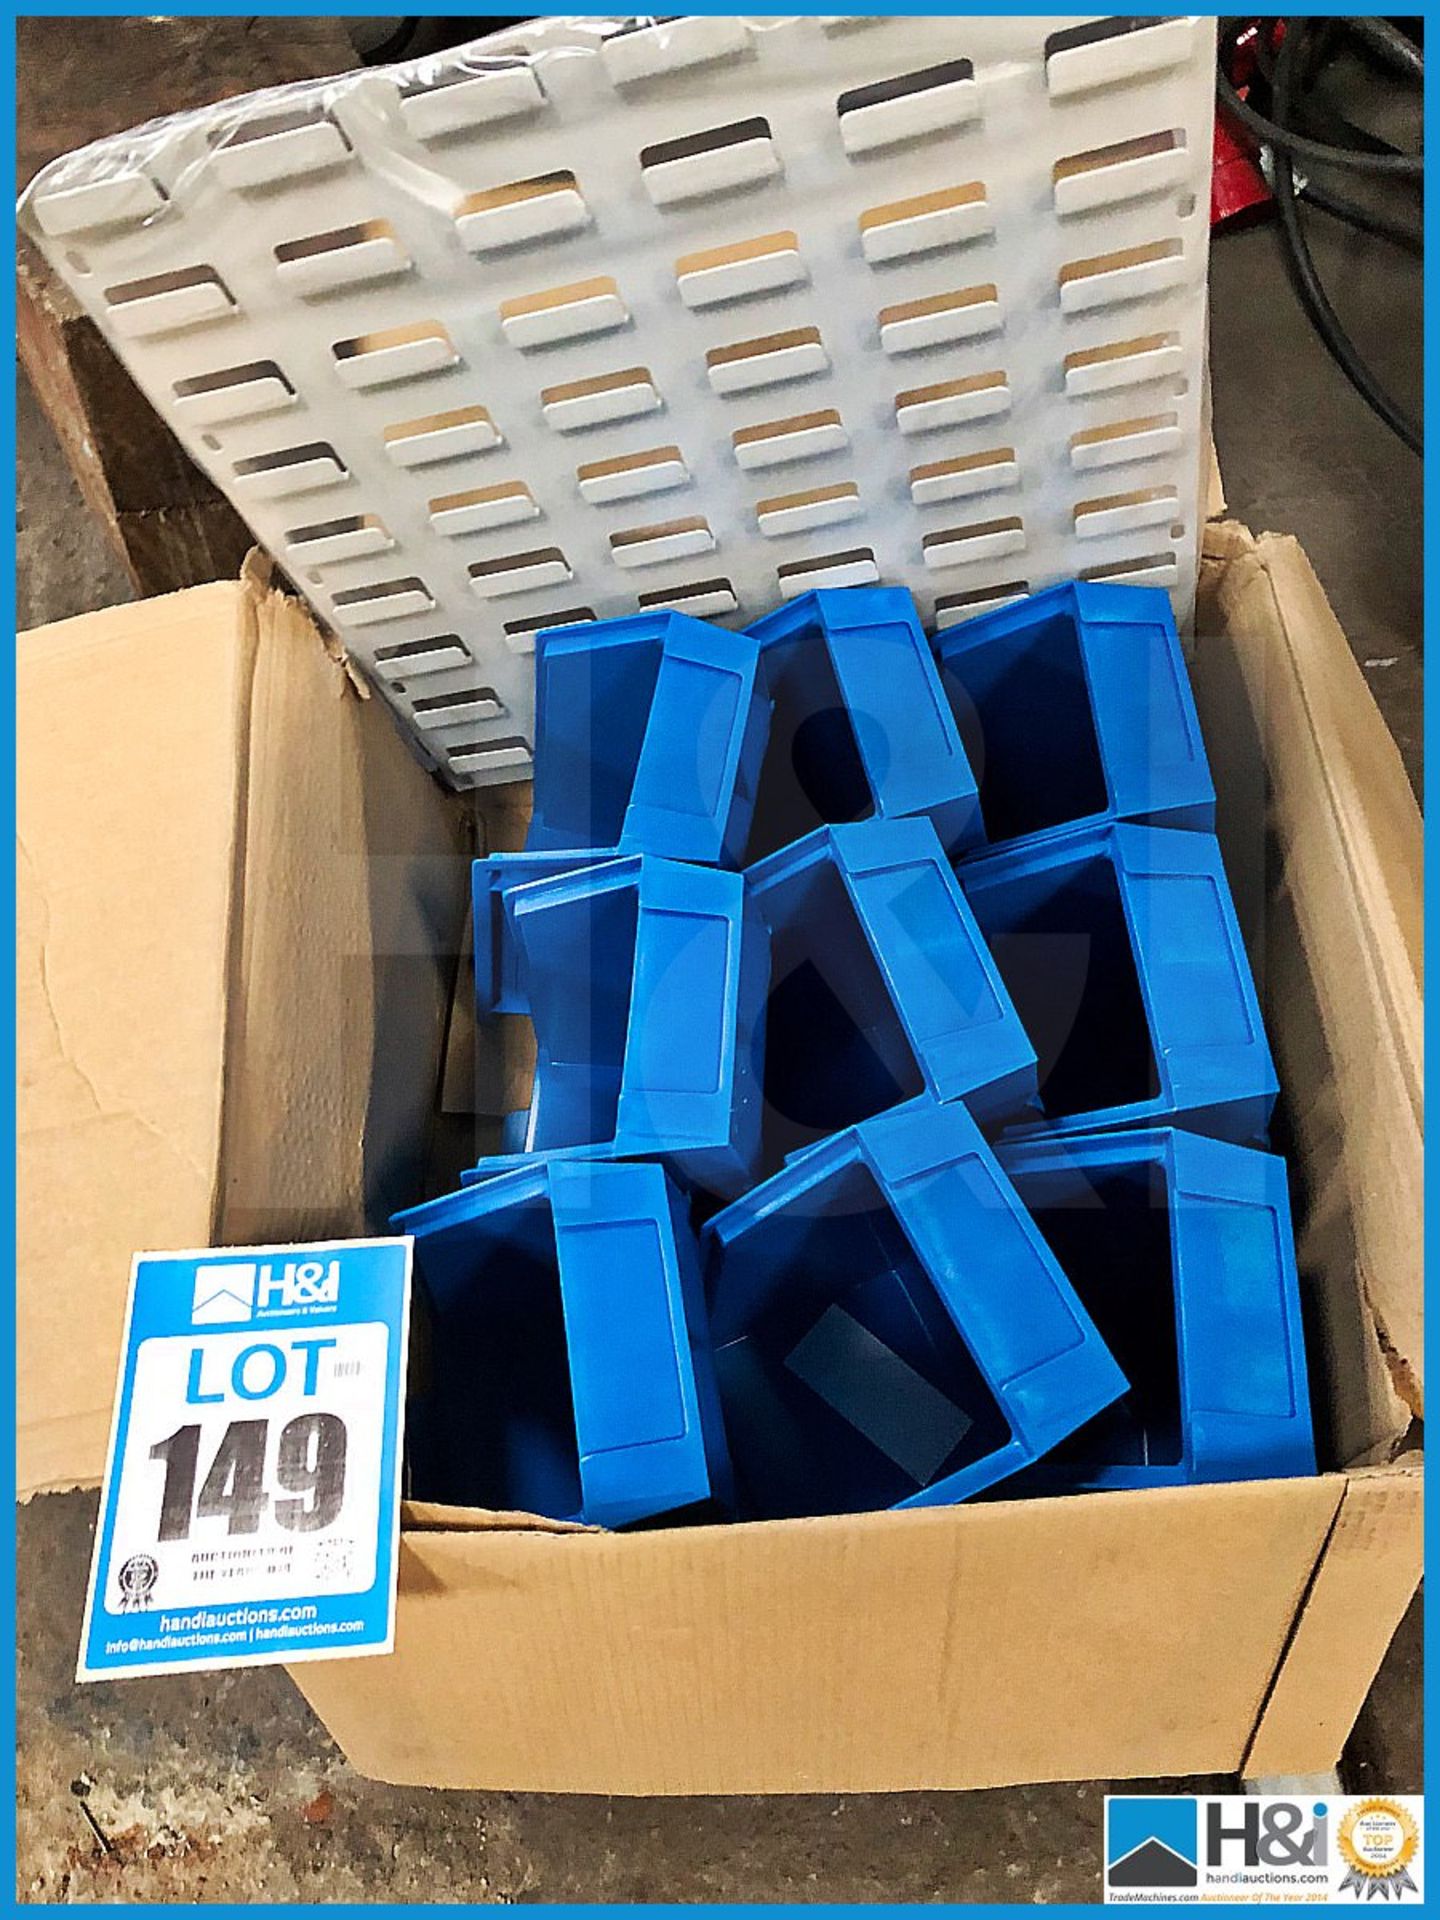 1 x new Metabin linbin storage bin set with 9 blue bins